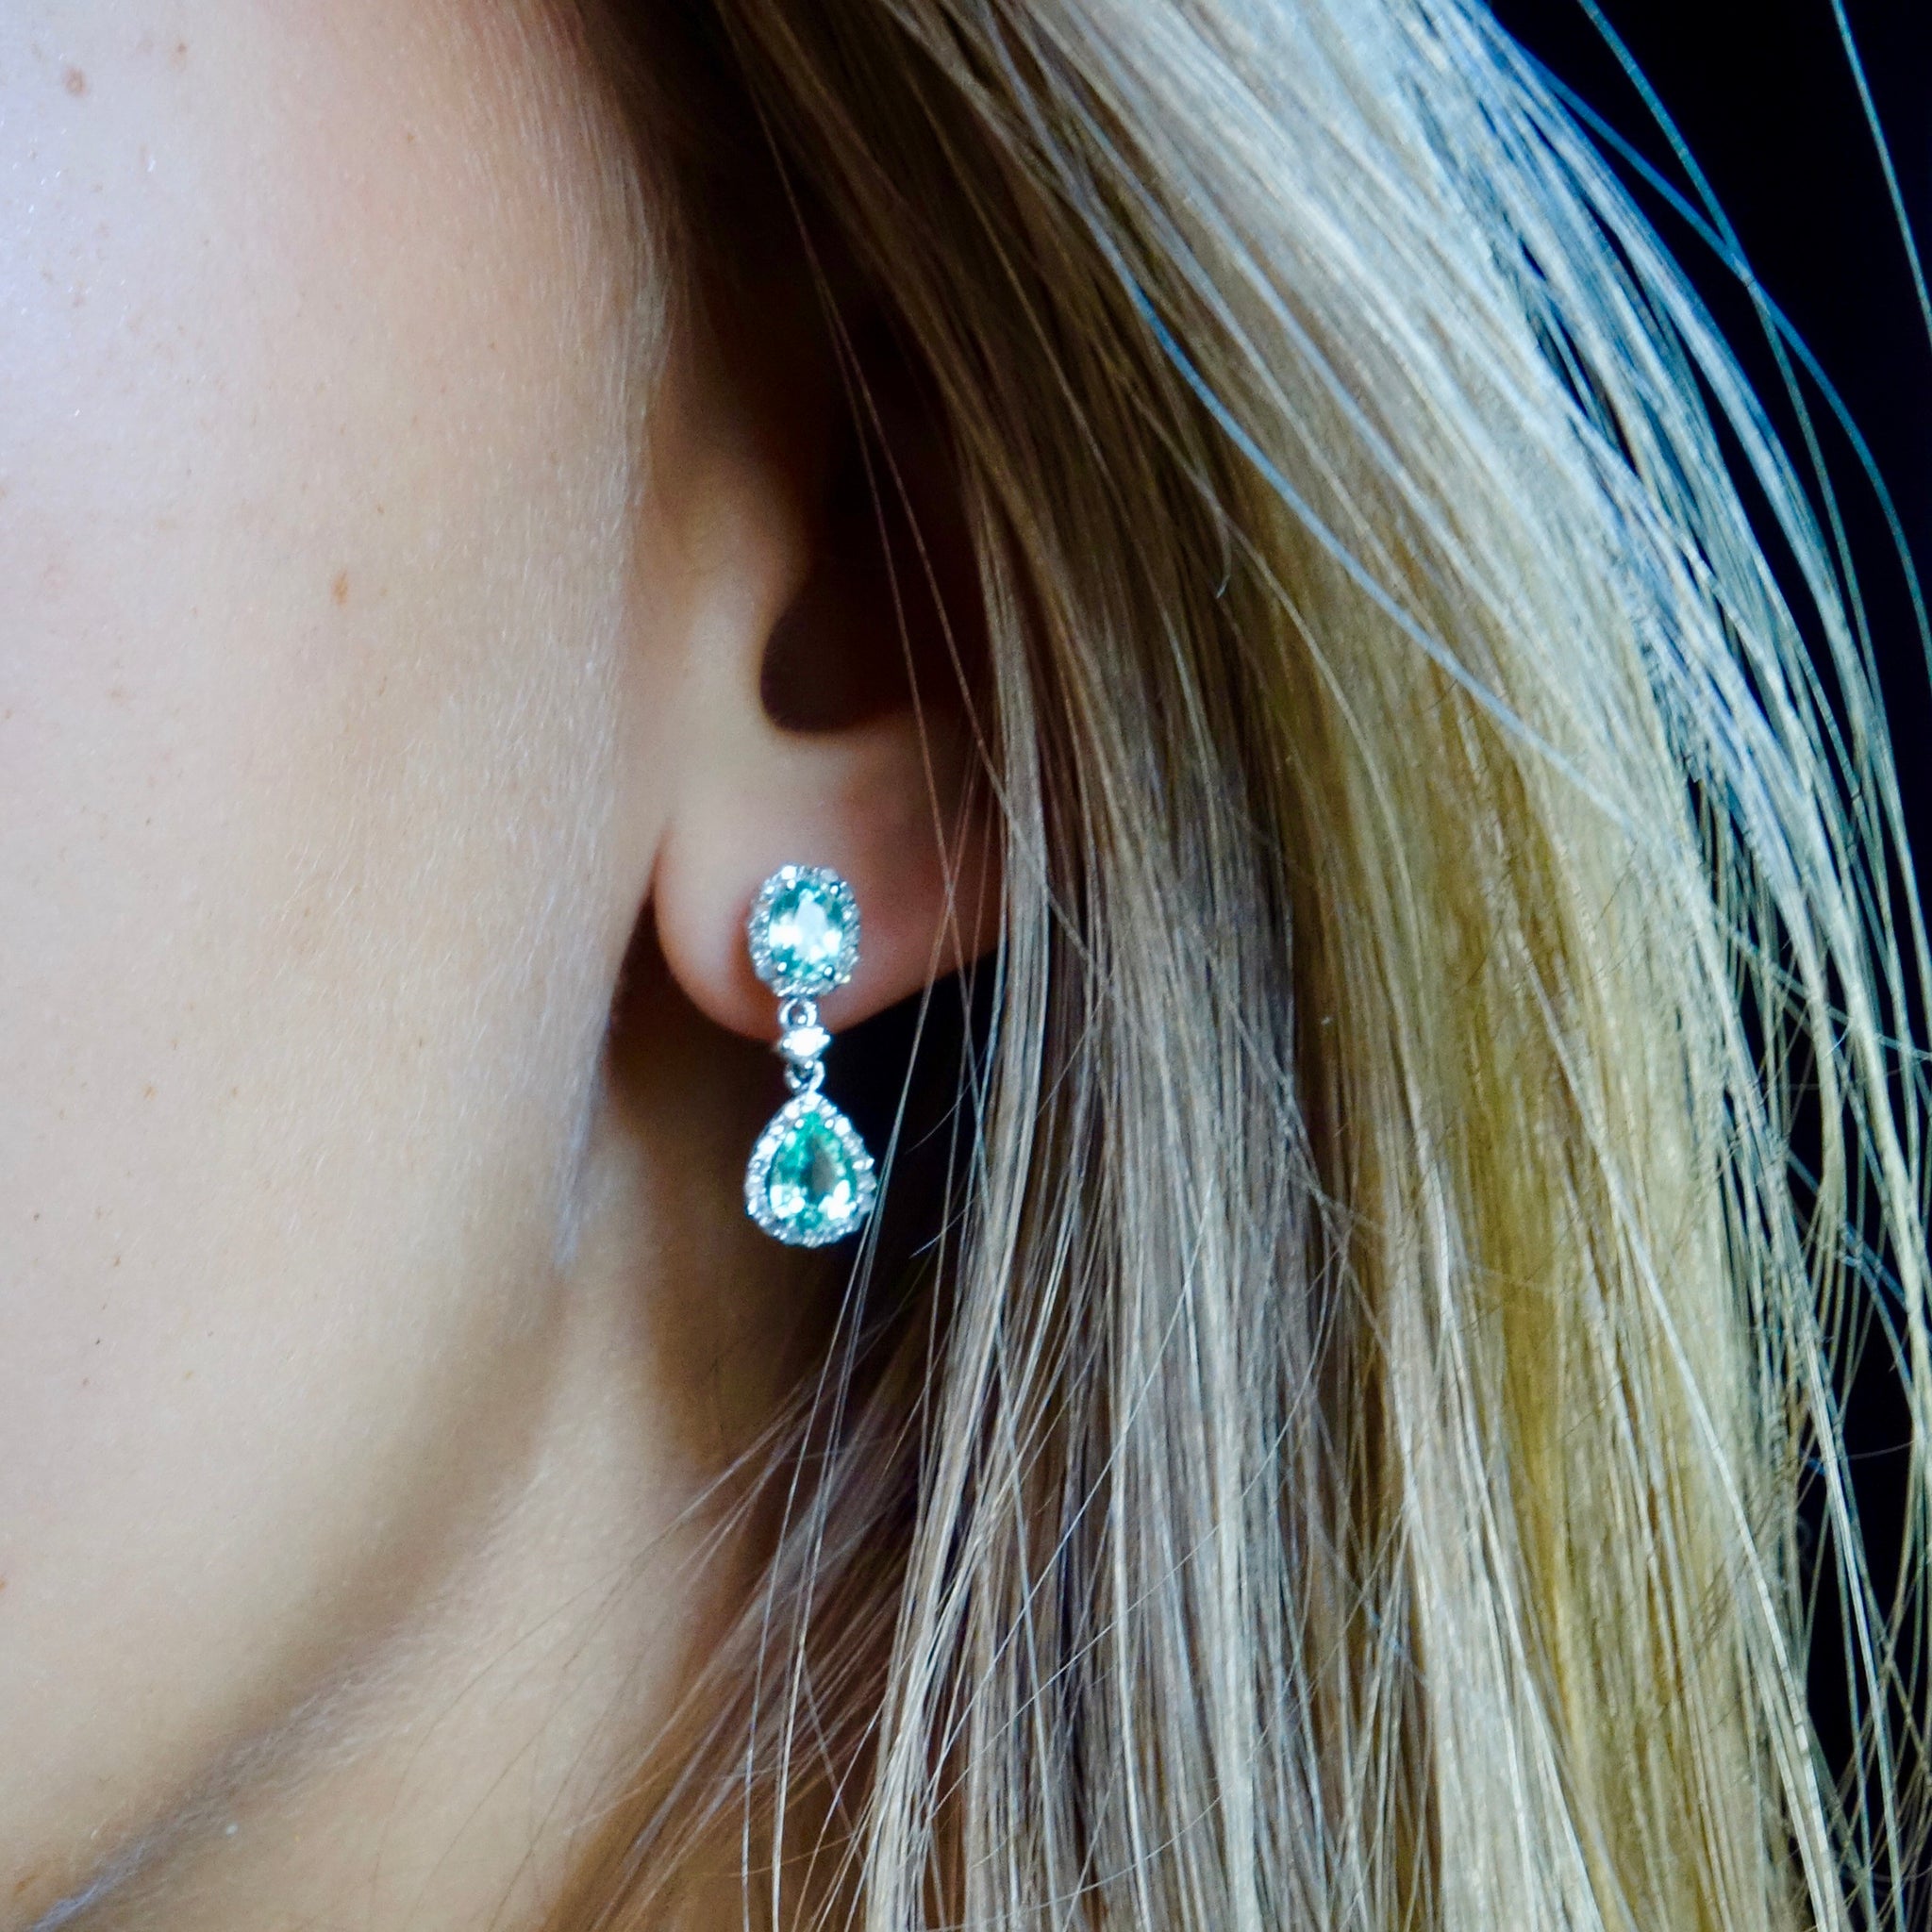 Paraiba Tourmaline and Diamond Earrings, Blue Green